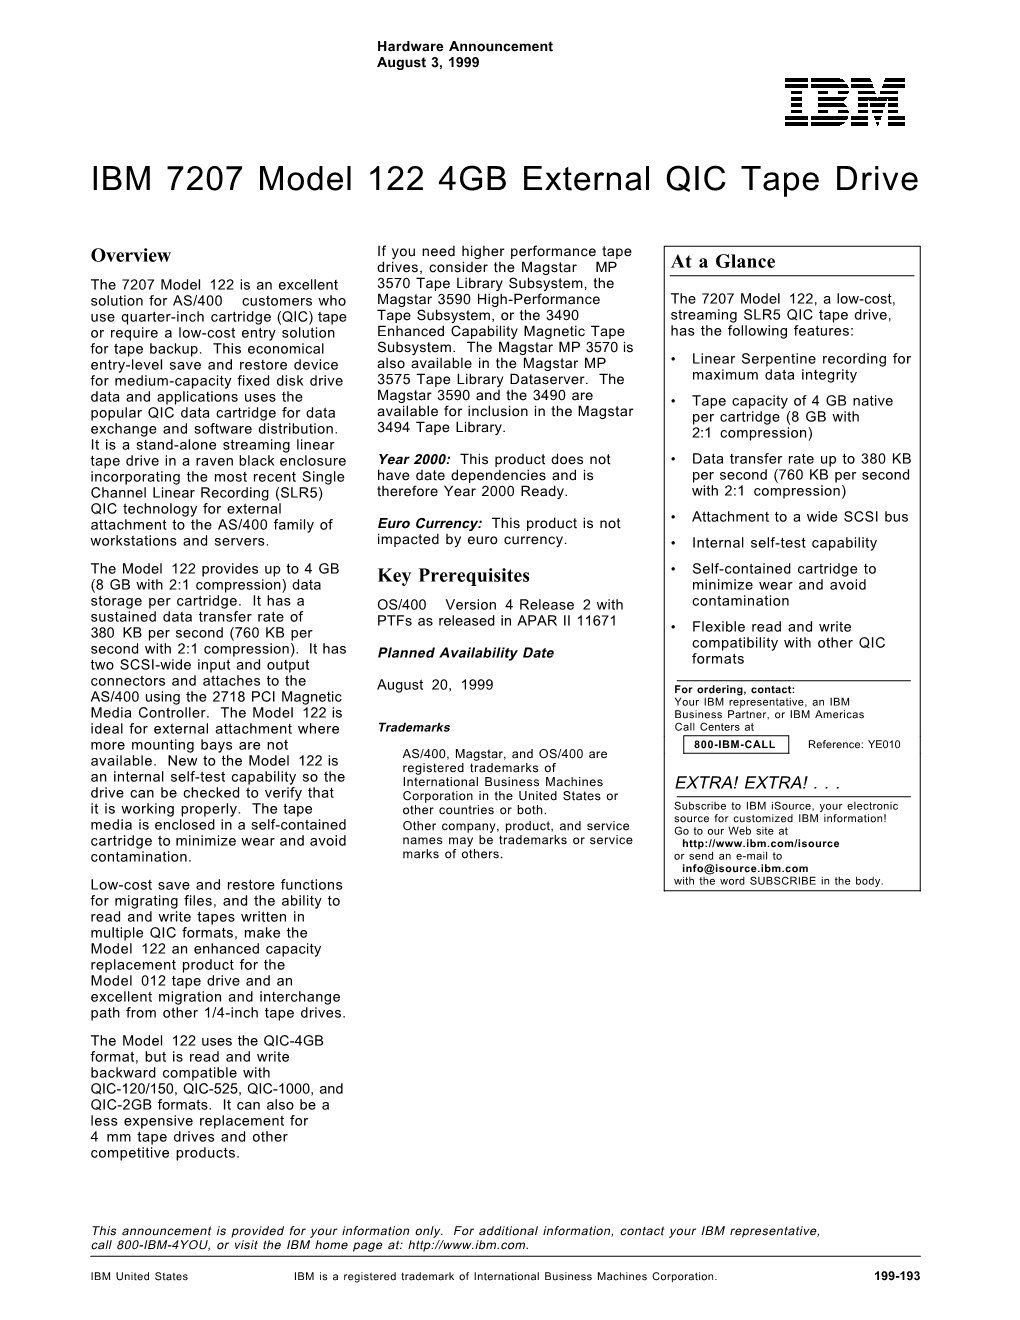 IBM 7207 Model 122 4GB External QIC Tape Drive